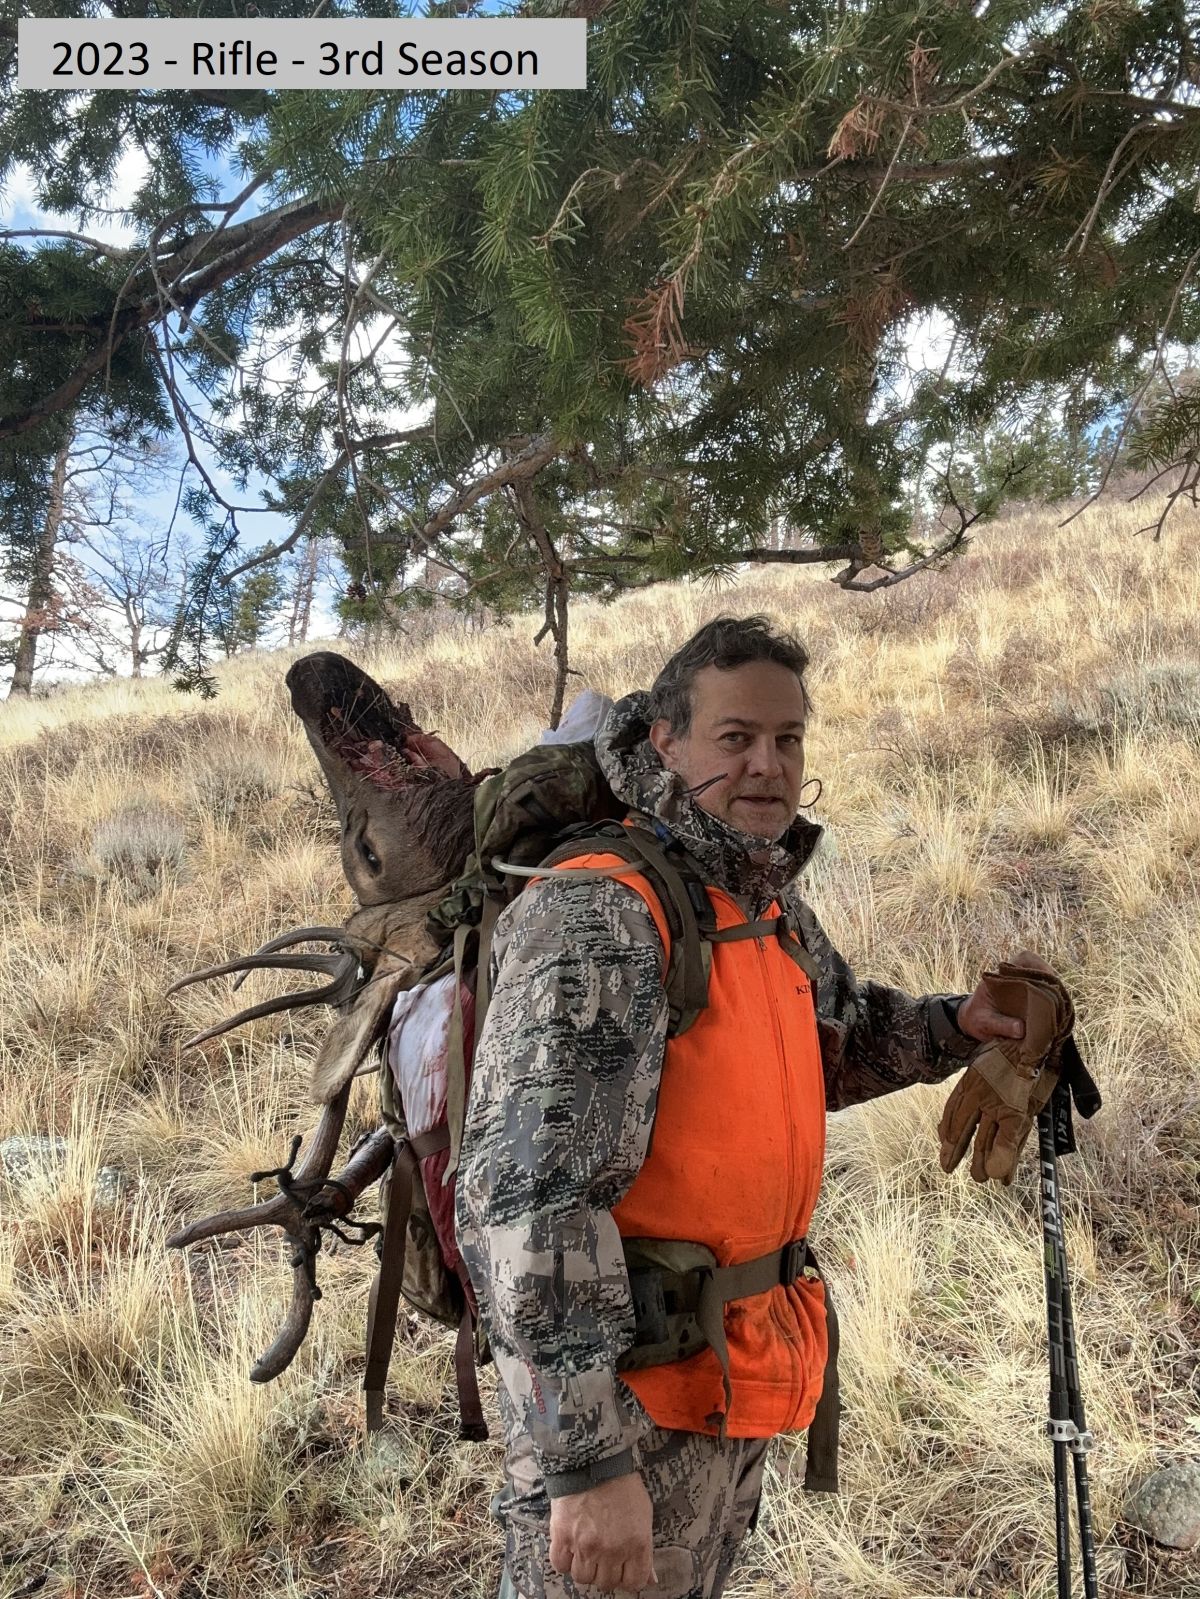 Lease #8 - High Mesa Ranch $2,900 per hunter